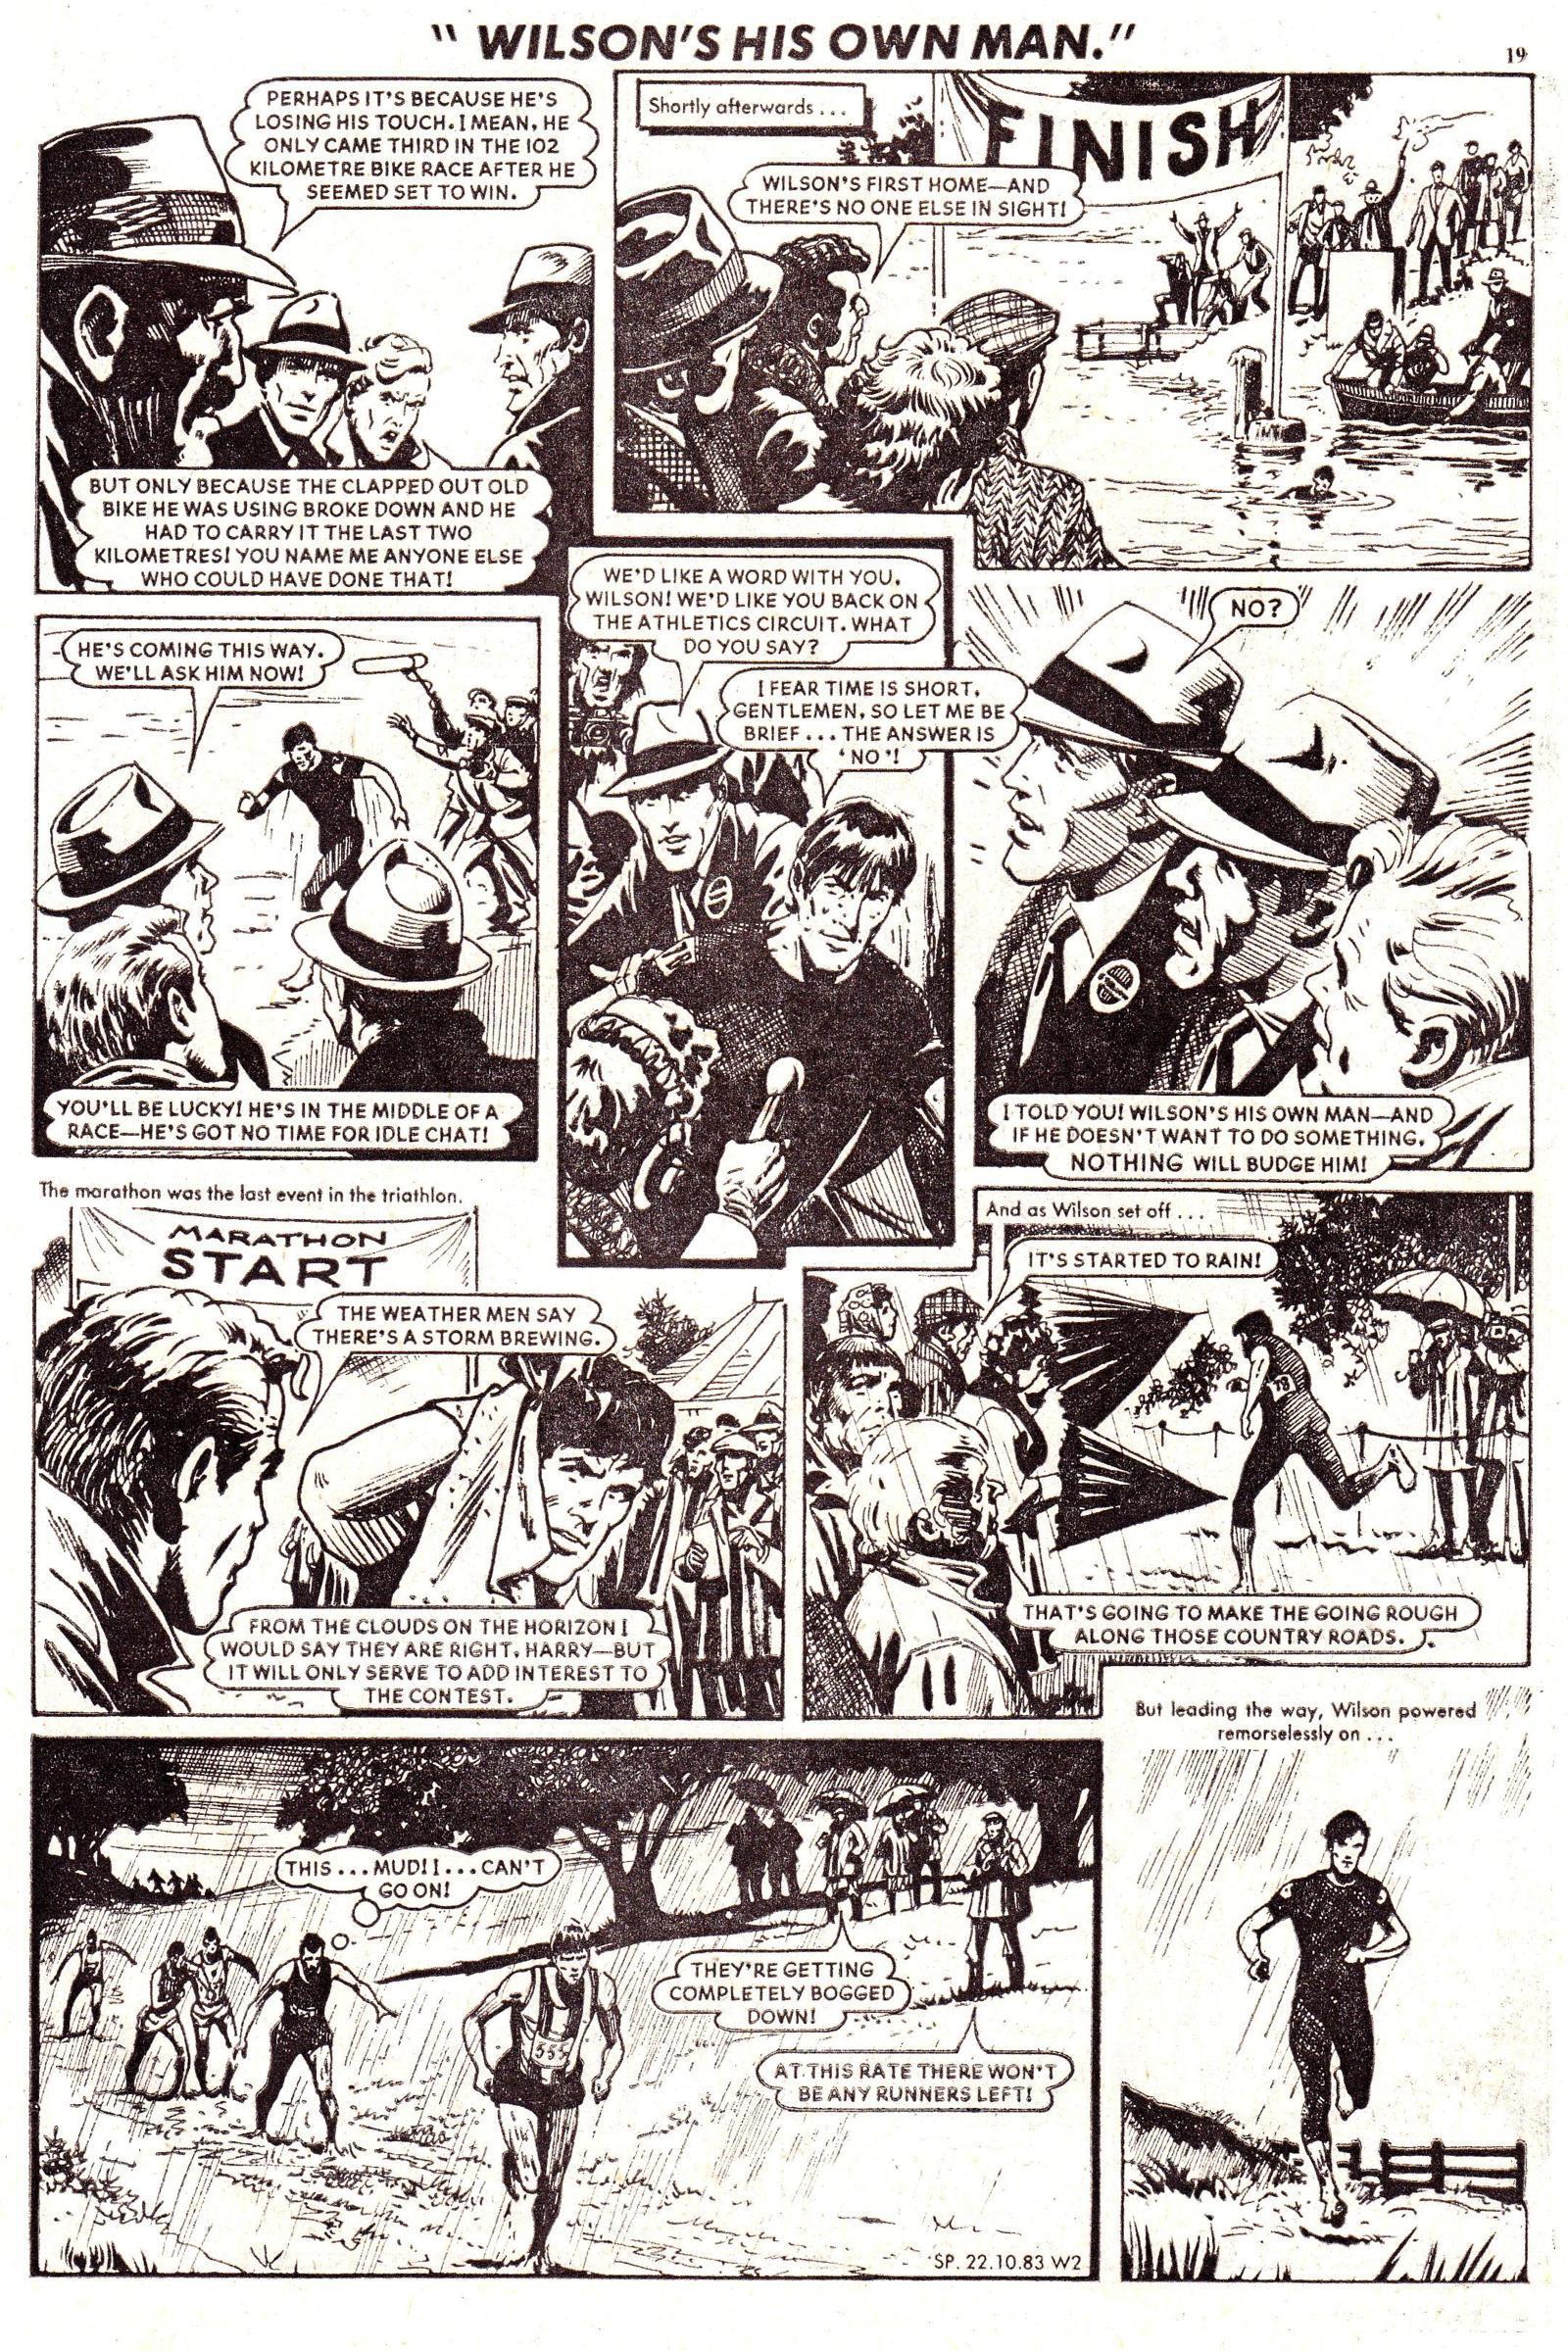 Spike 40 (1983) - Page 19